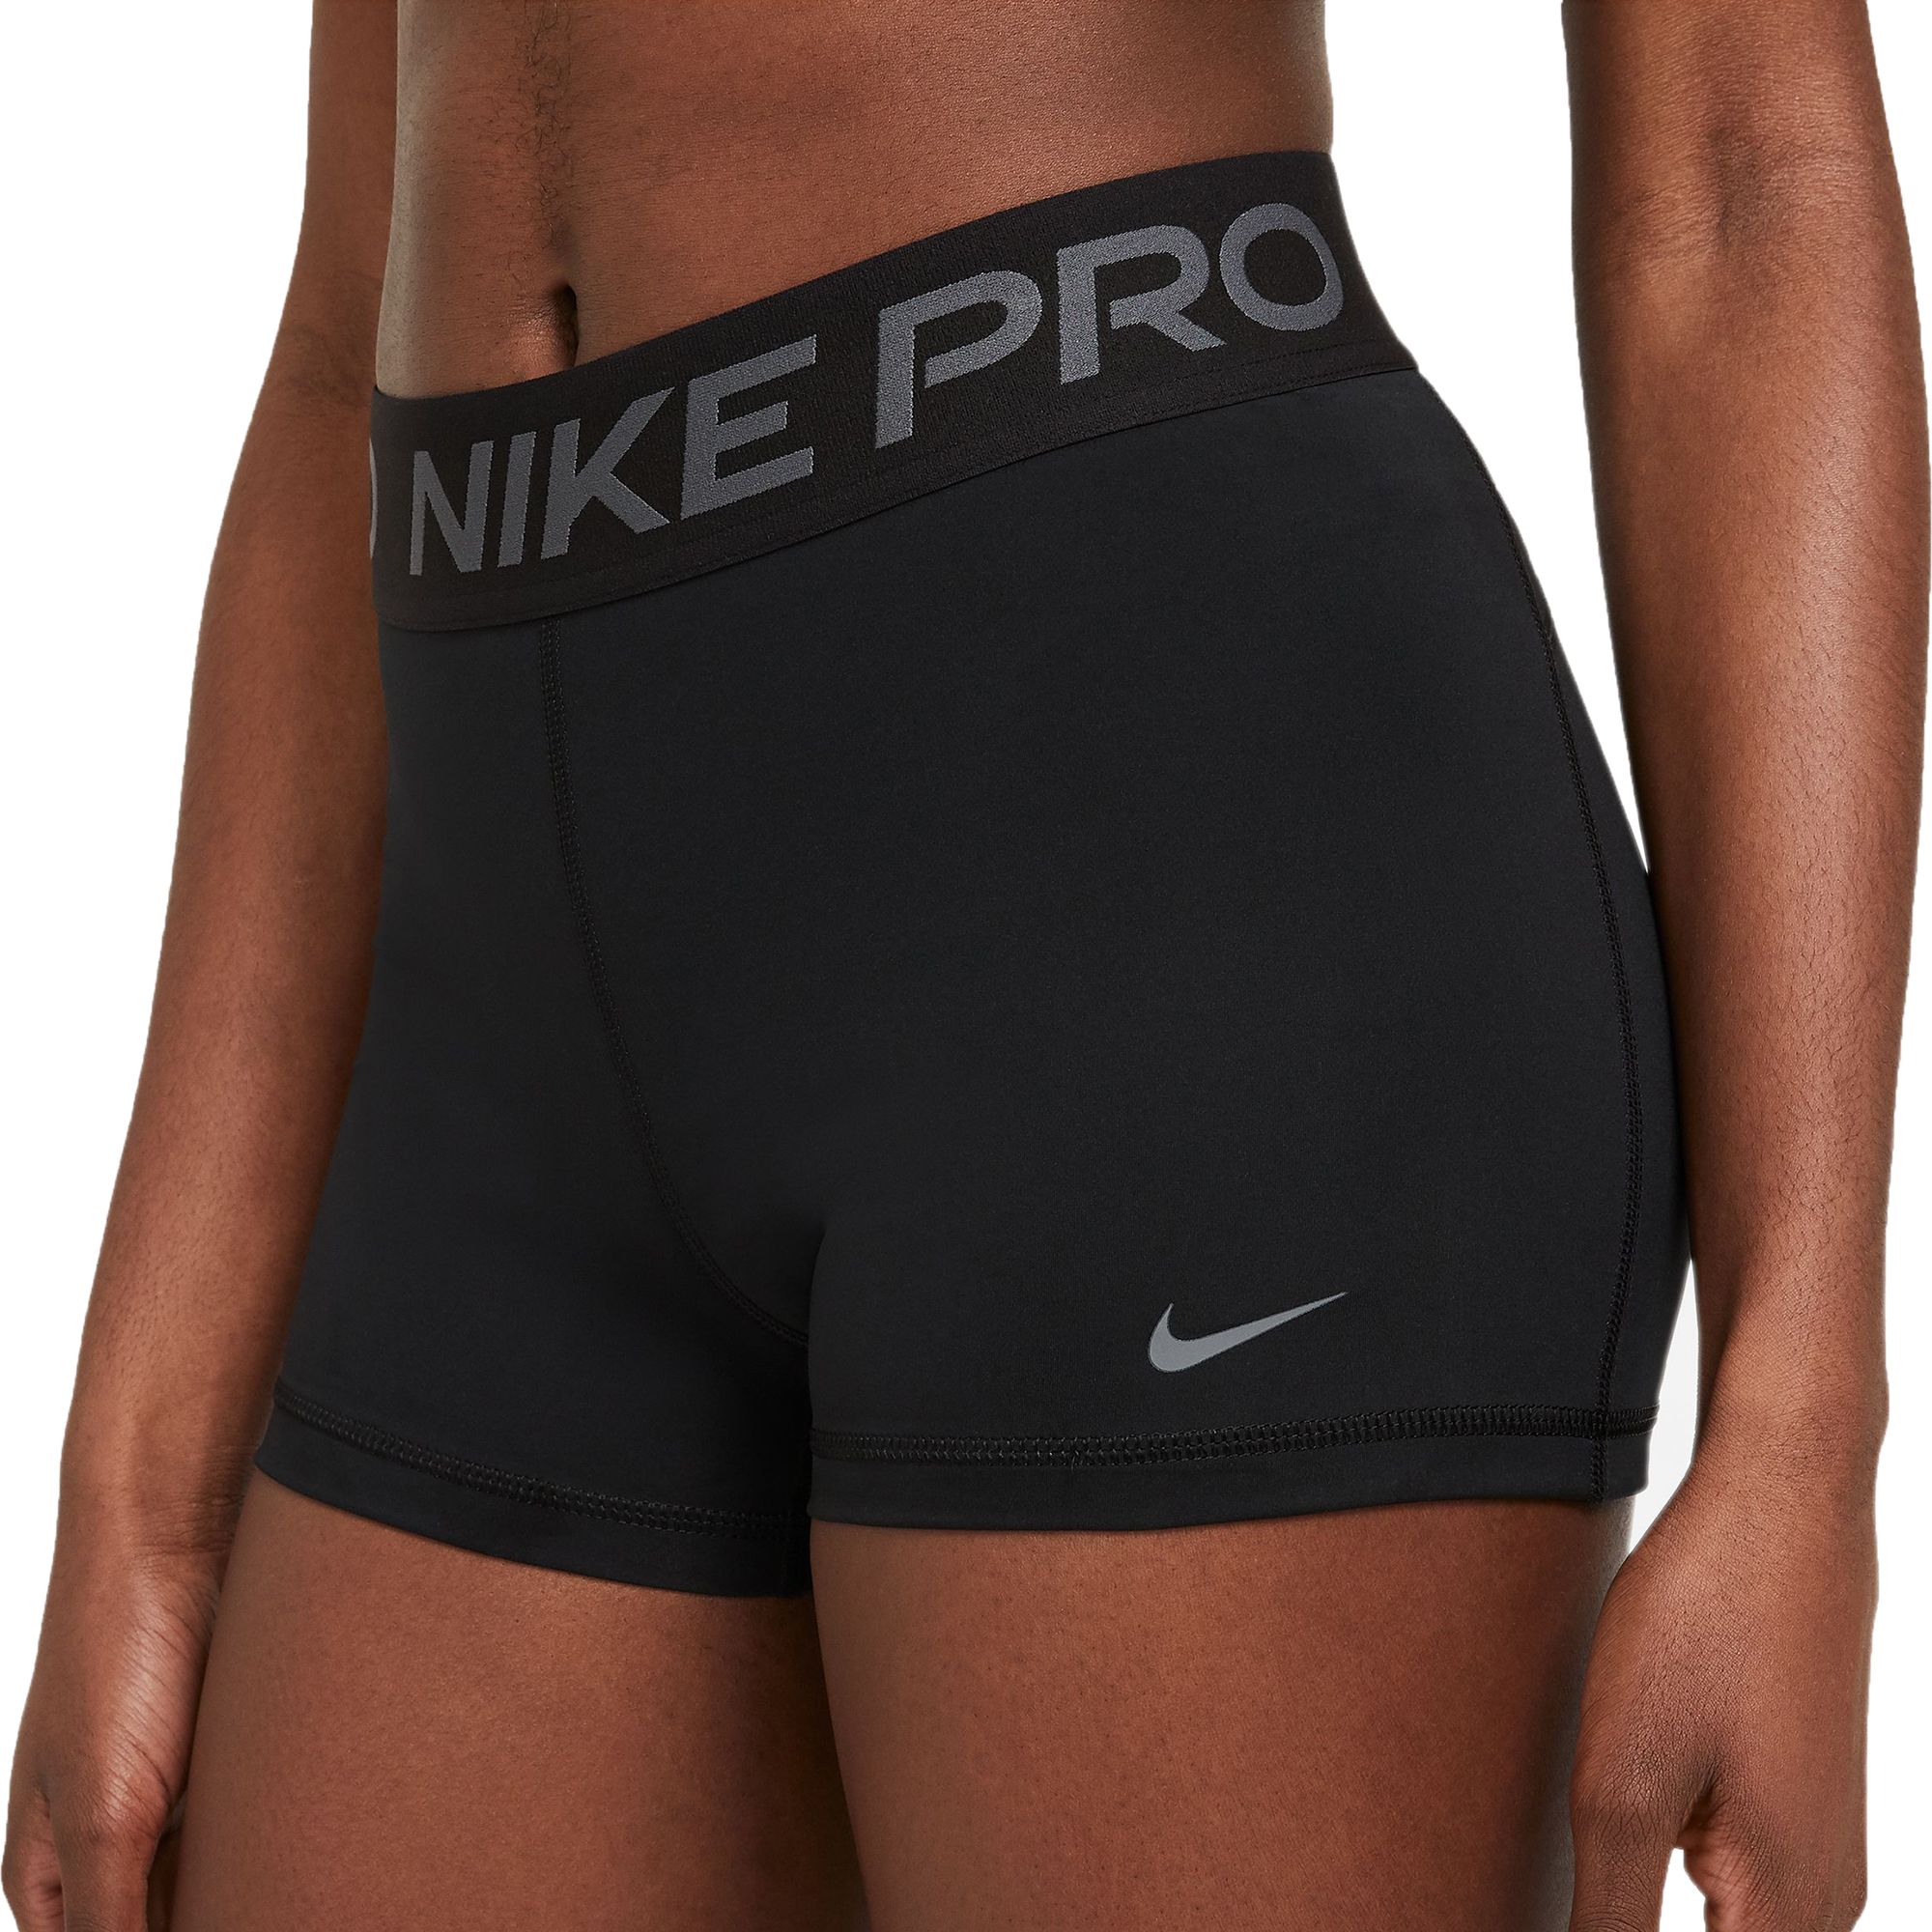 nike pro 3 inch shorts size small